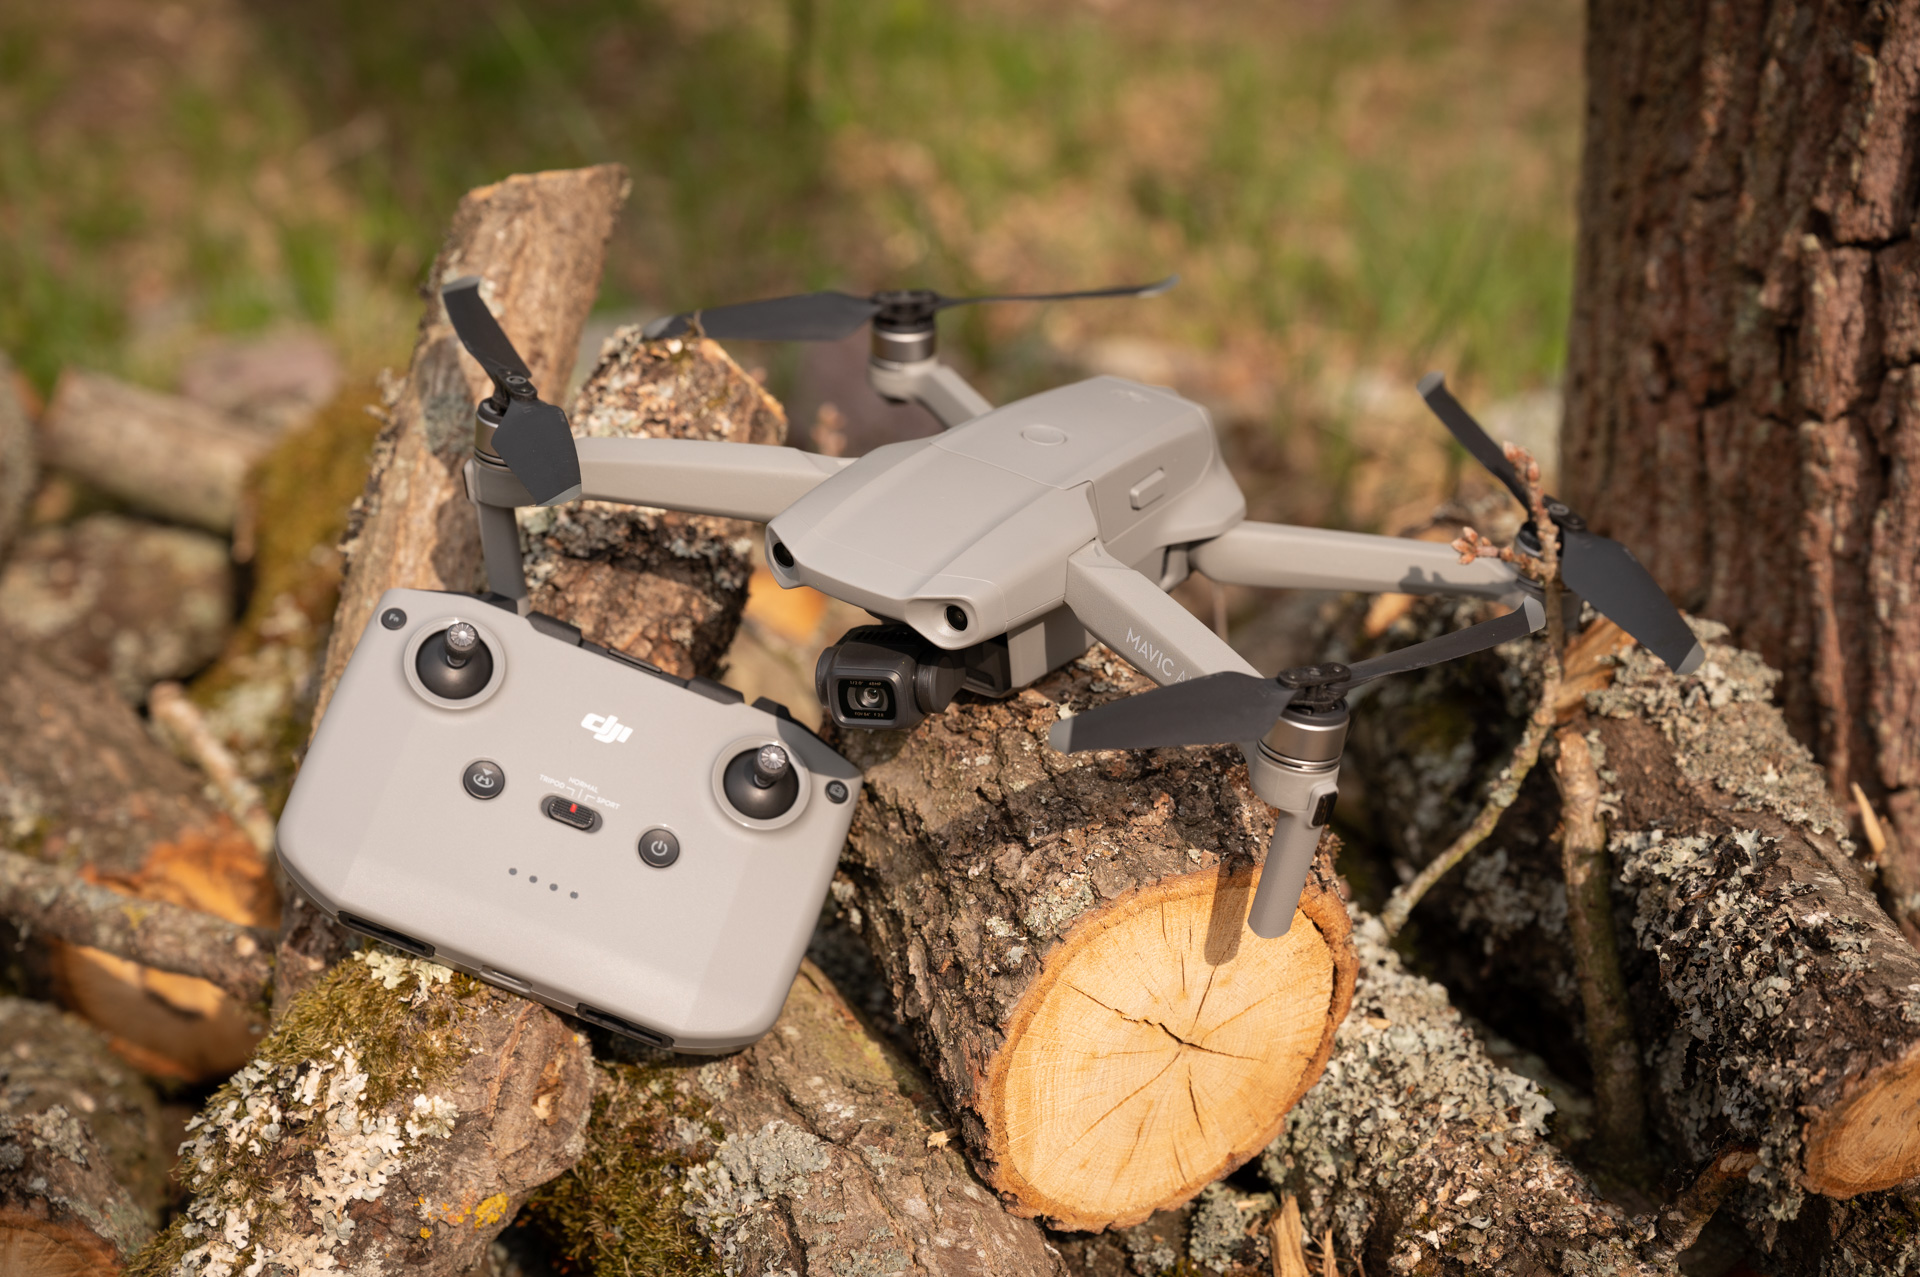 DJI Mini 4 Pro et radiocommande DJI RC-N2 : Le petit drone qui devient grand